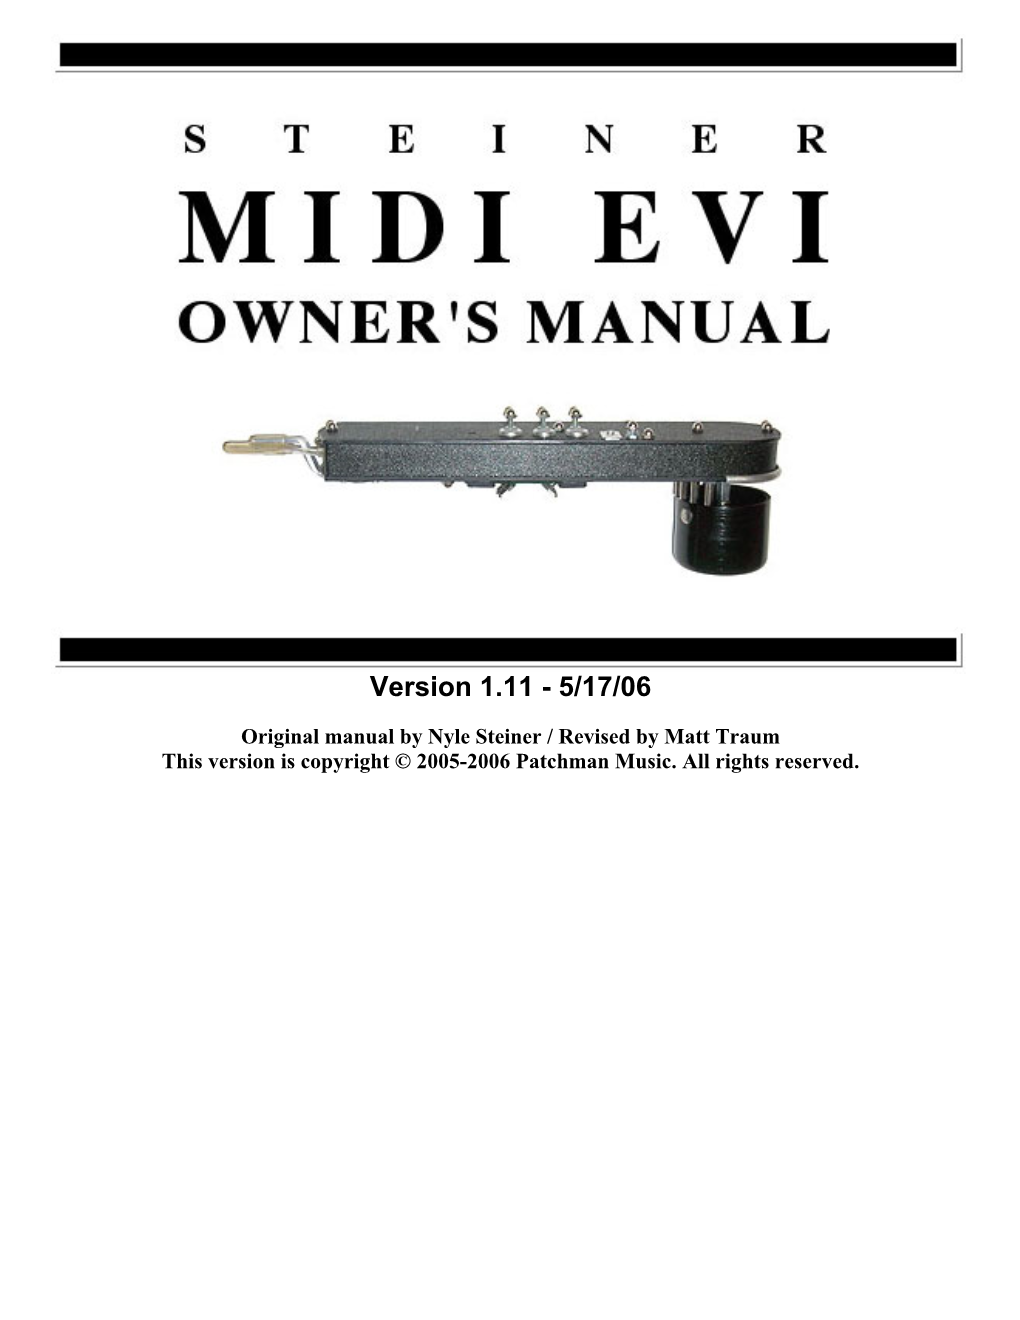 Patchman Music MIDI EVI Manual